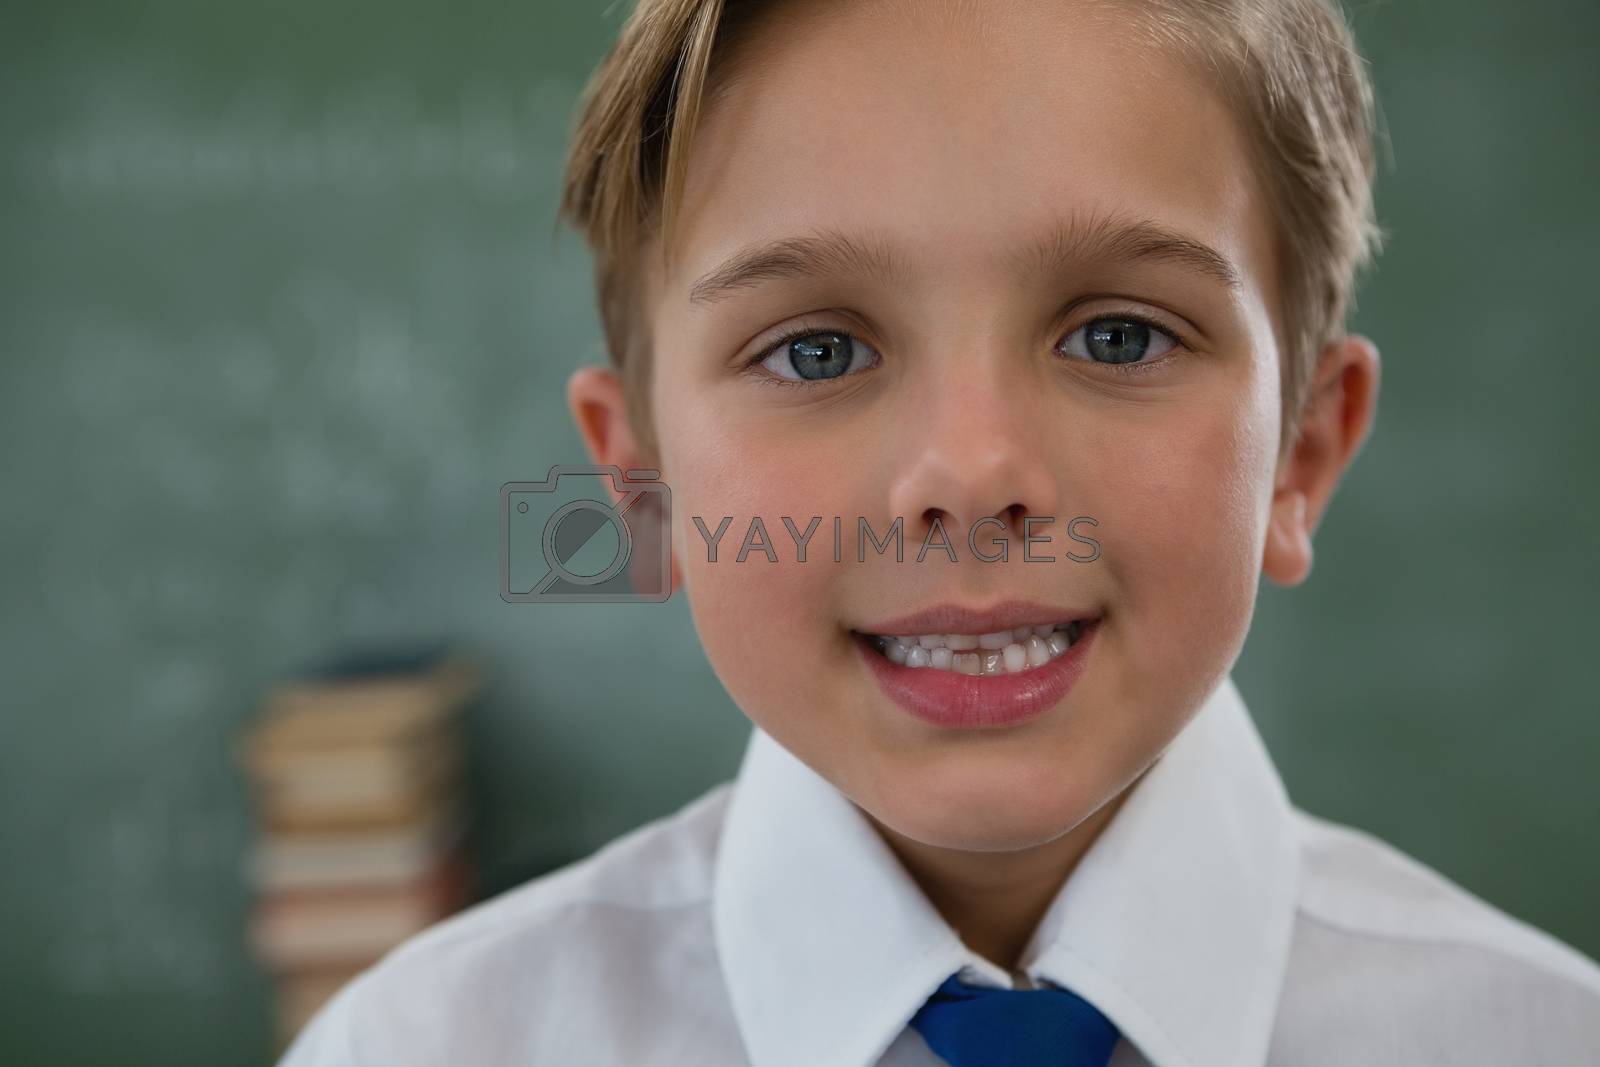 Royalty free image of Smiling schoolboy against chalkboard by Wavebreakmedia